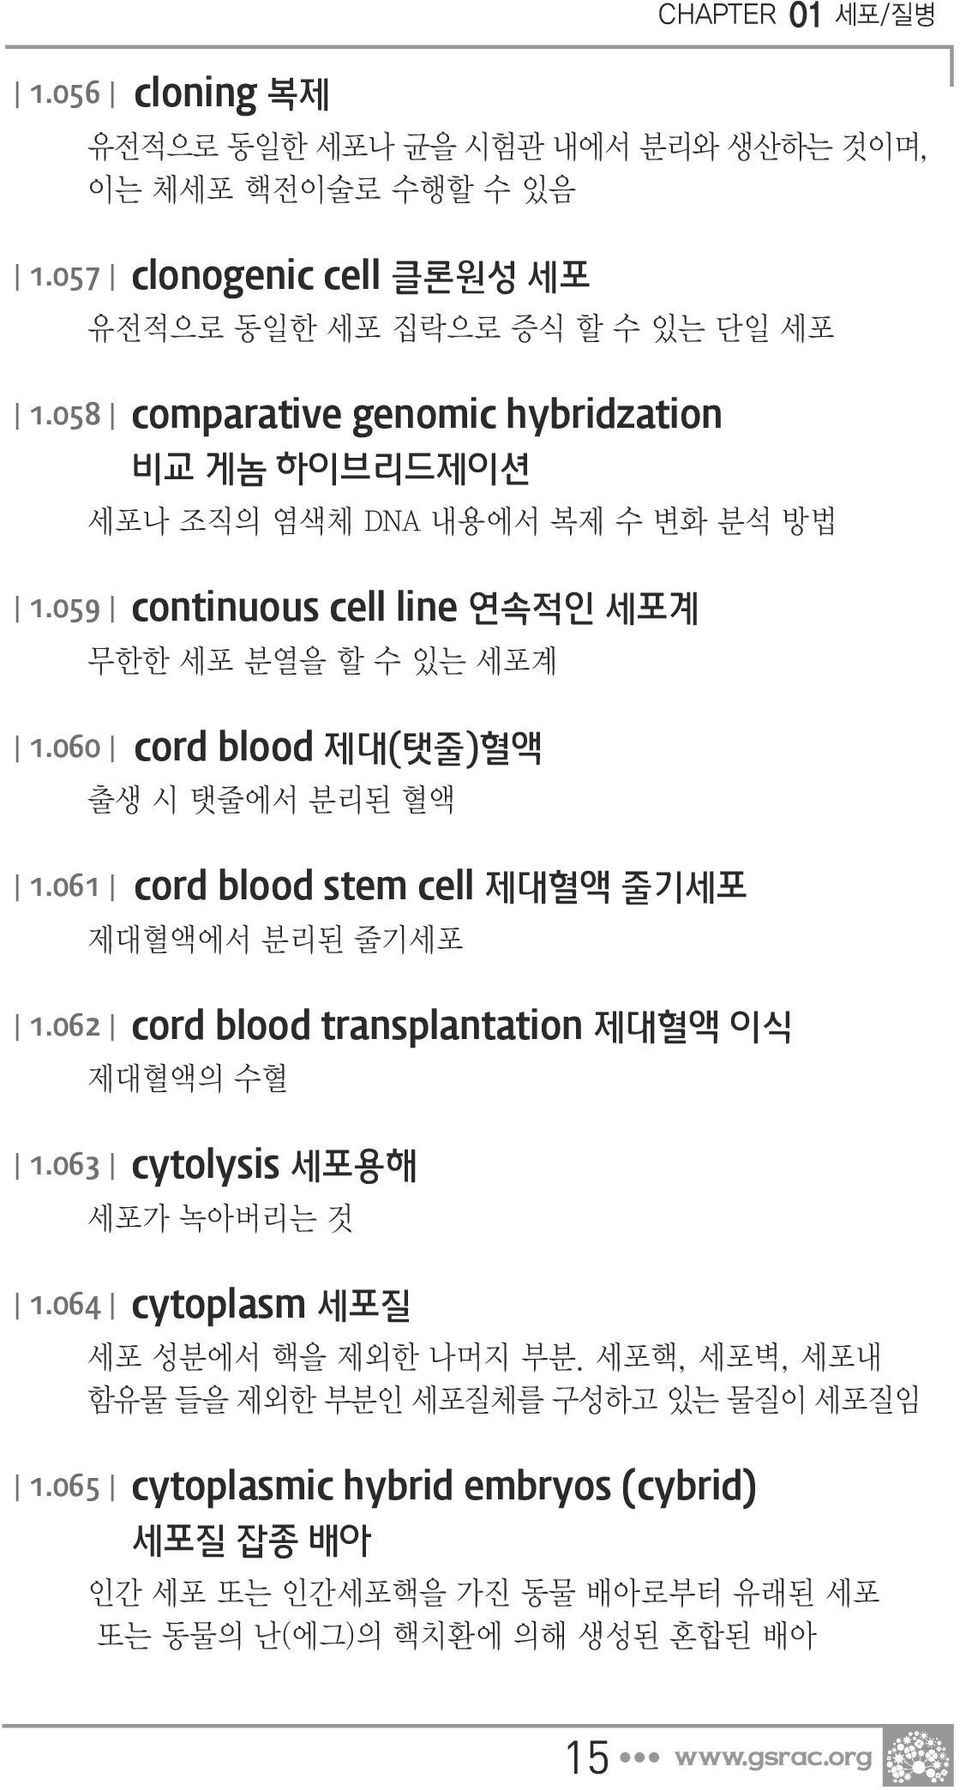 060 cord blood 제대(탯줄)혈액 출생 시 탯줄에서 분리된 혈액 1.061 cord blood stem cell 제대혈액 줄기세포 제대혈액에서 분리된 줄기세포 1.062 cord blood transplantation 제대혈액 이식 제대혈액의 수혈 1.063 cytolysis 세포용해 세포가 녹아버리는 것 1.